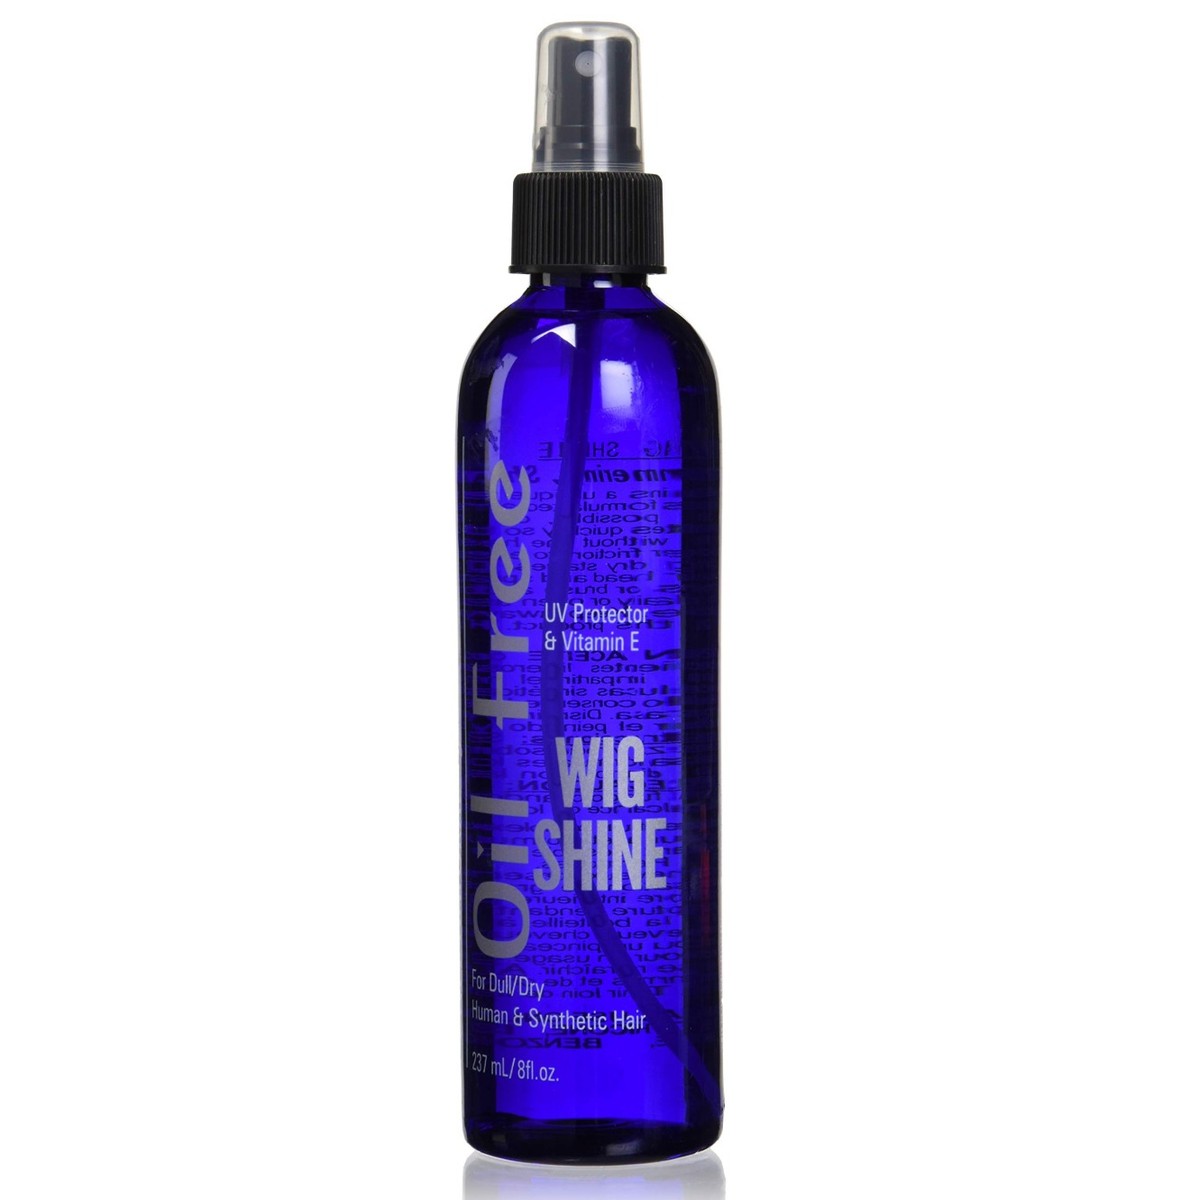 Wonder Lace Bond Adhesive Spray 2.7 oz/80 ml - Sensitive